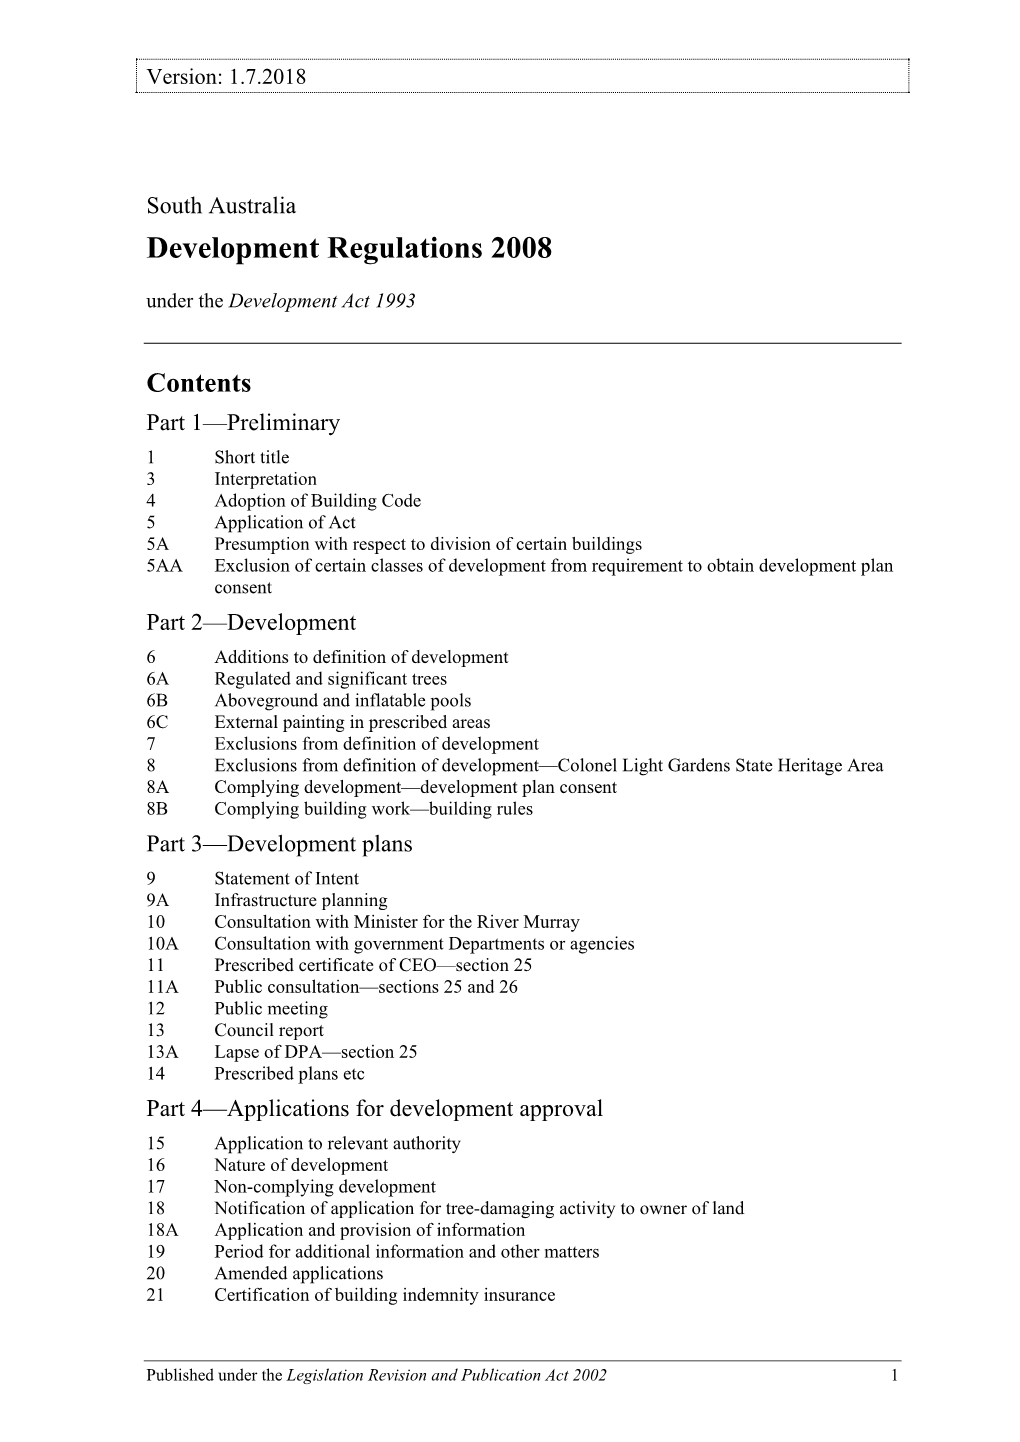 Development Regulations 2008 Under the Development Act 1993